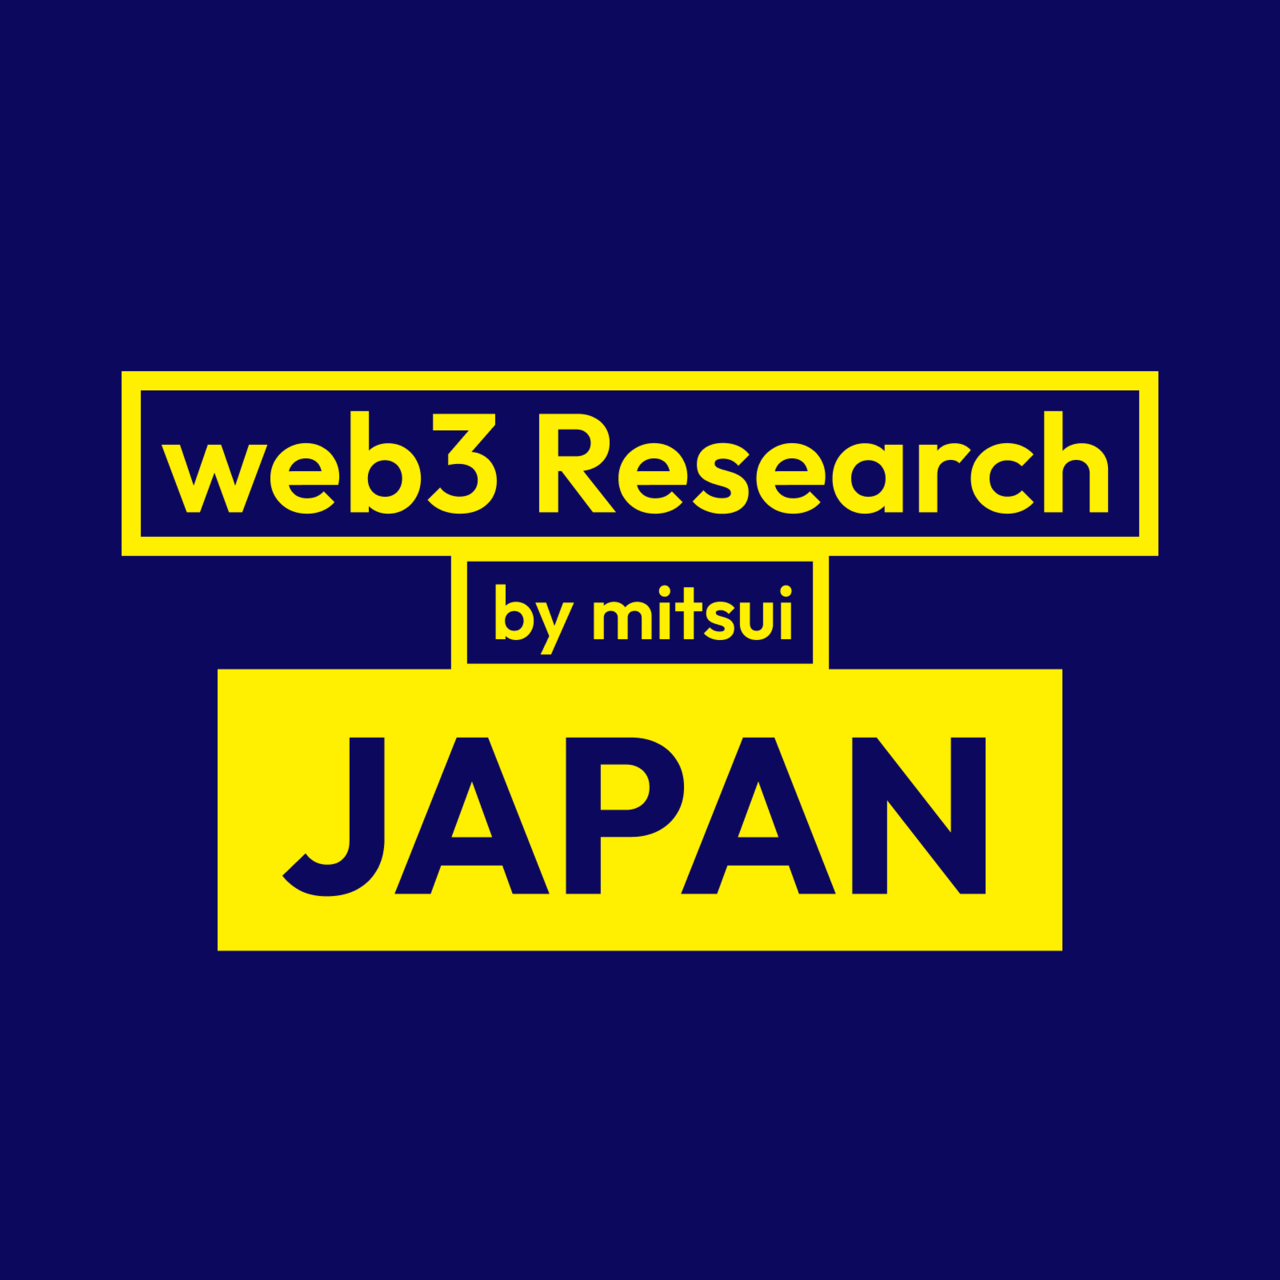 Artwork for web3 Research JAPAN